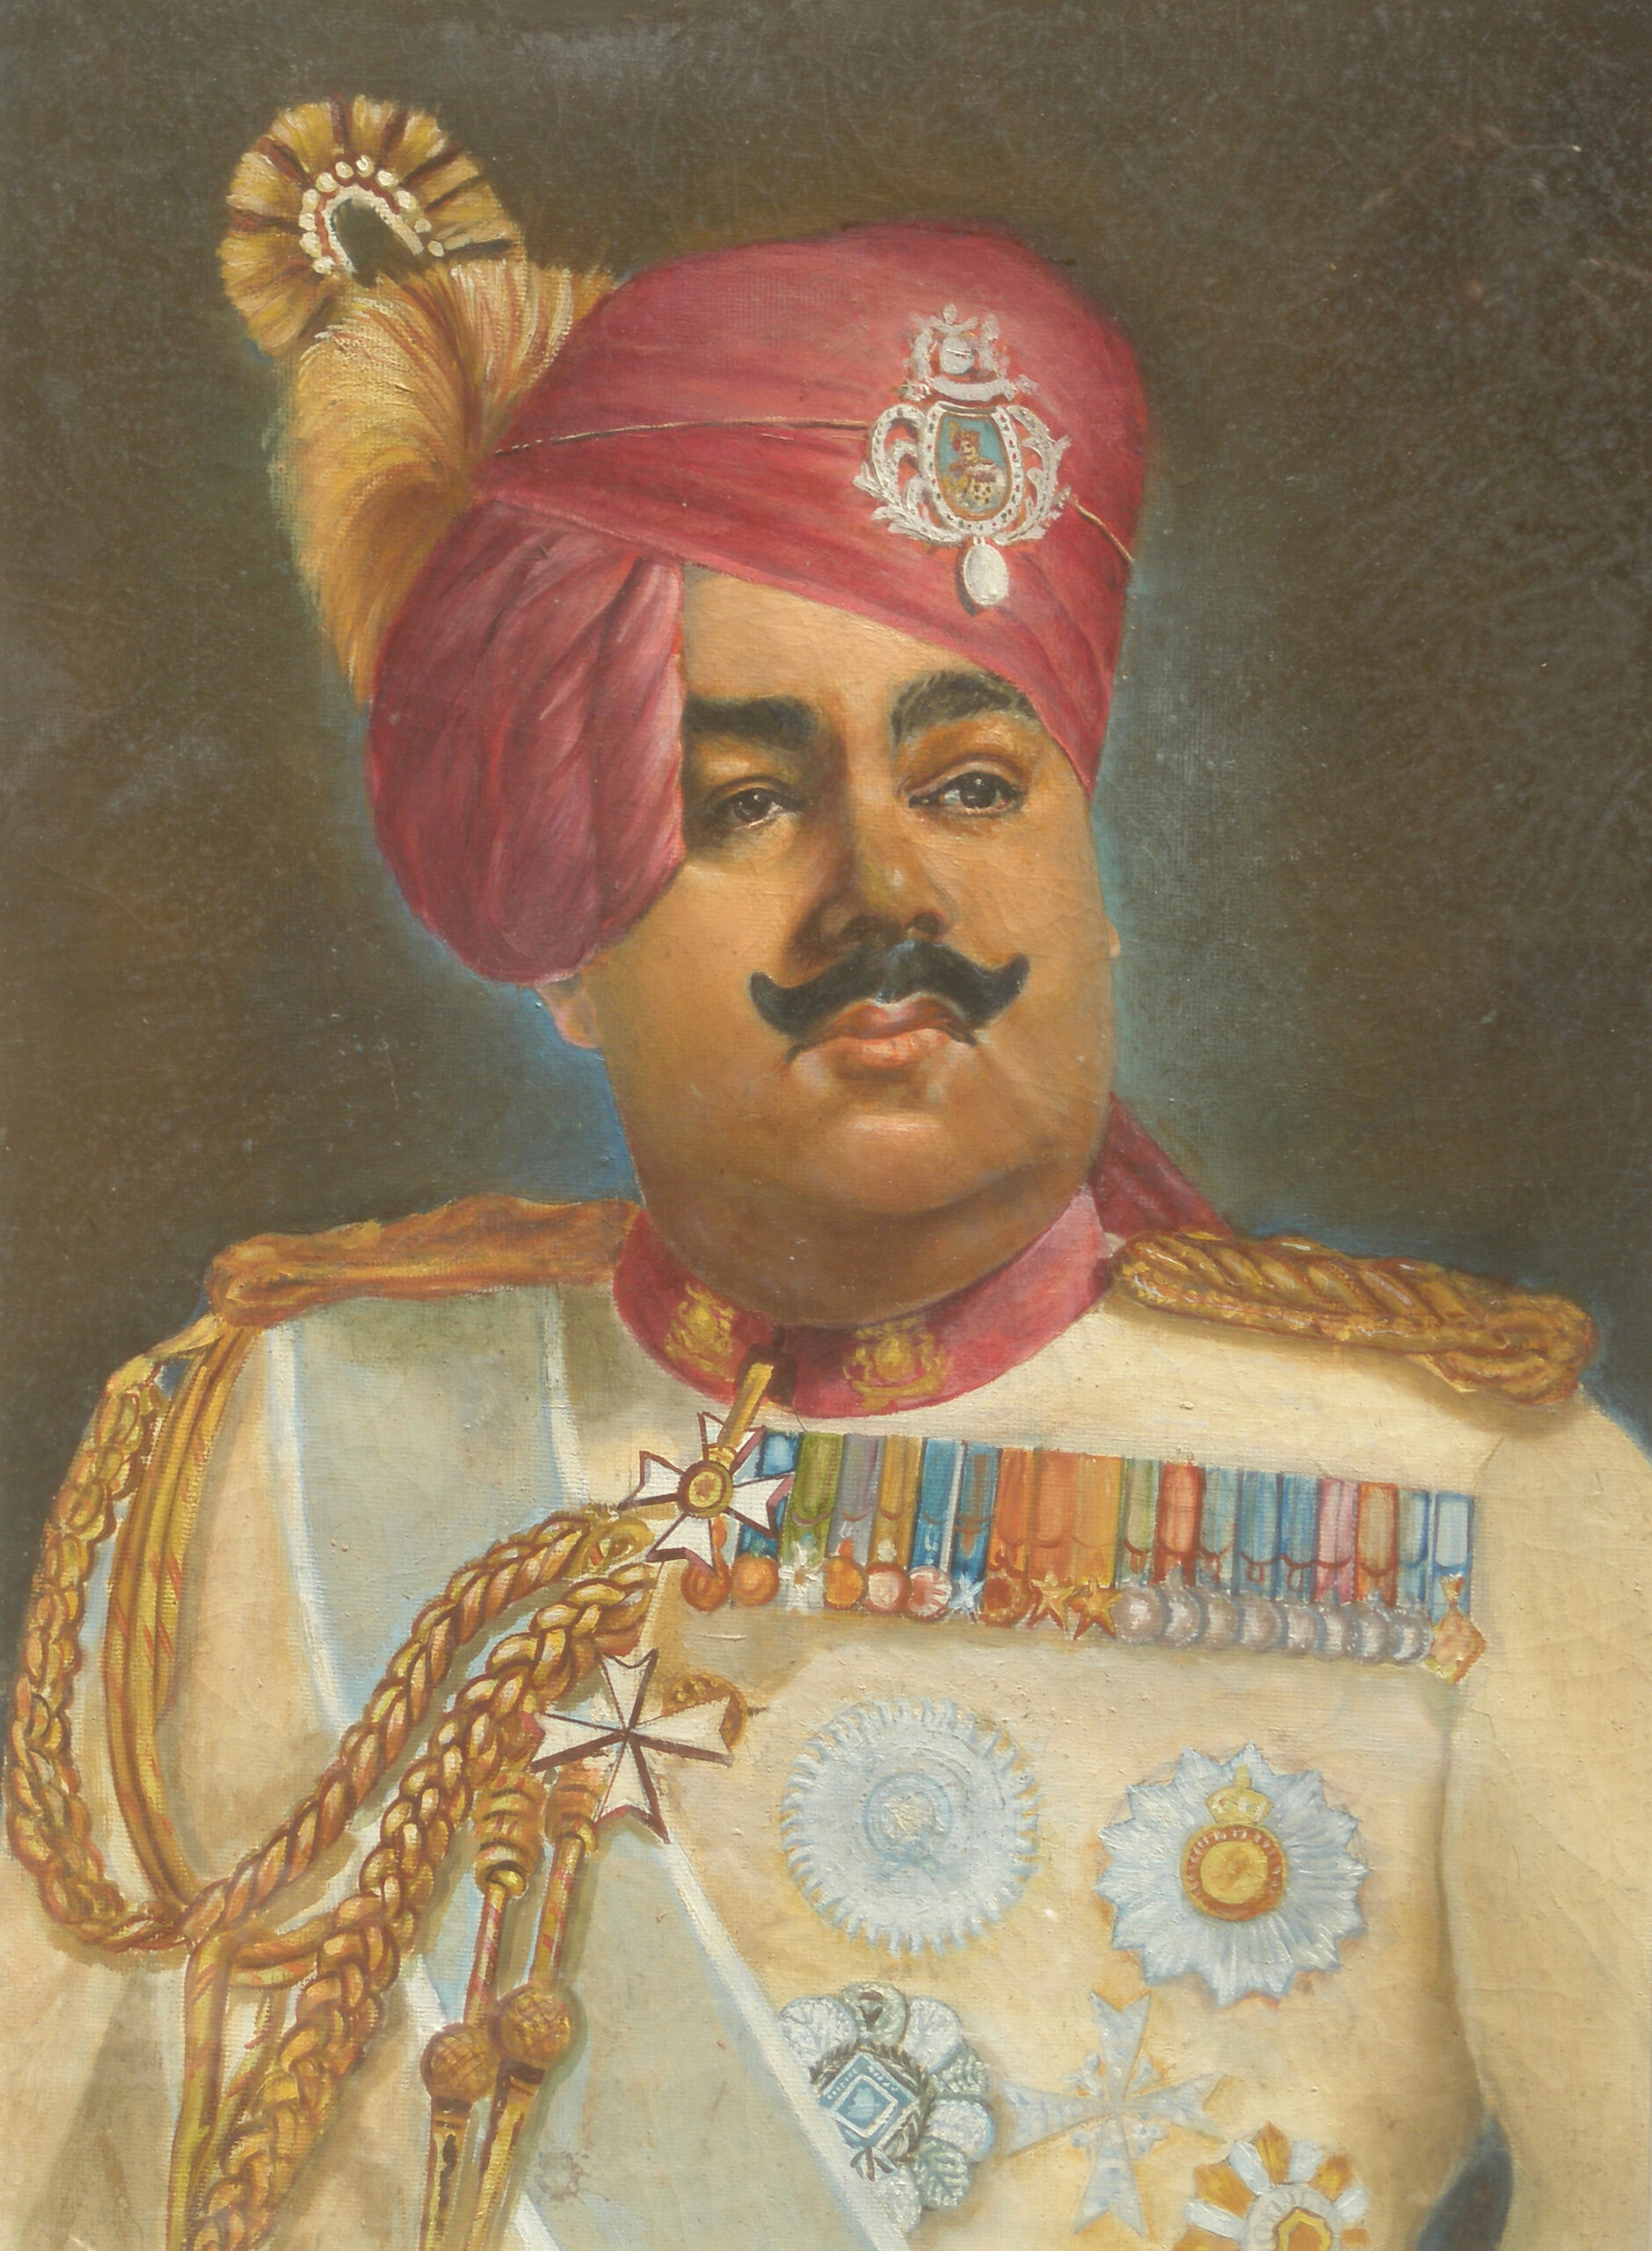 Portait of Maharaja of Bharatpur